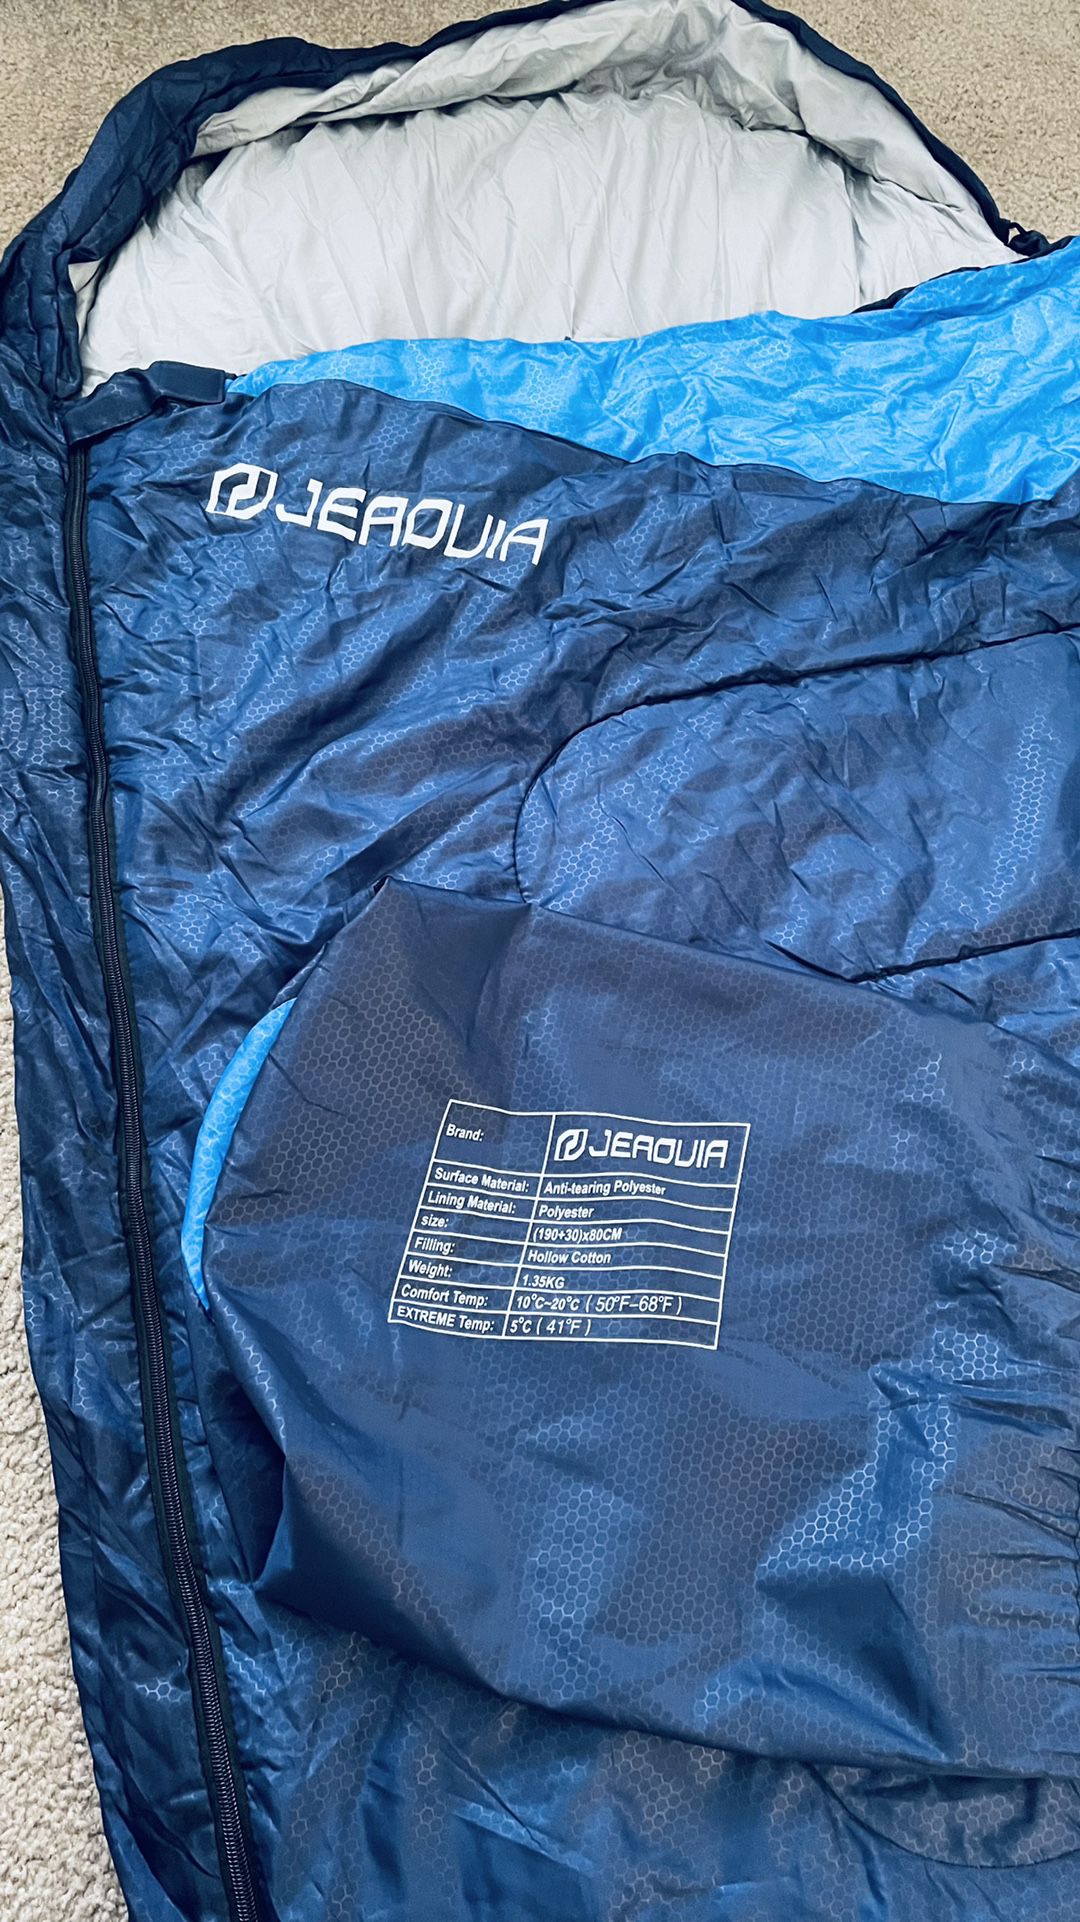 ✅✅ Brand new sleeping bag lightweight waterproof adult kids men women unisex camping hiking sleep